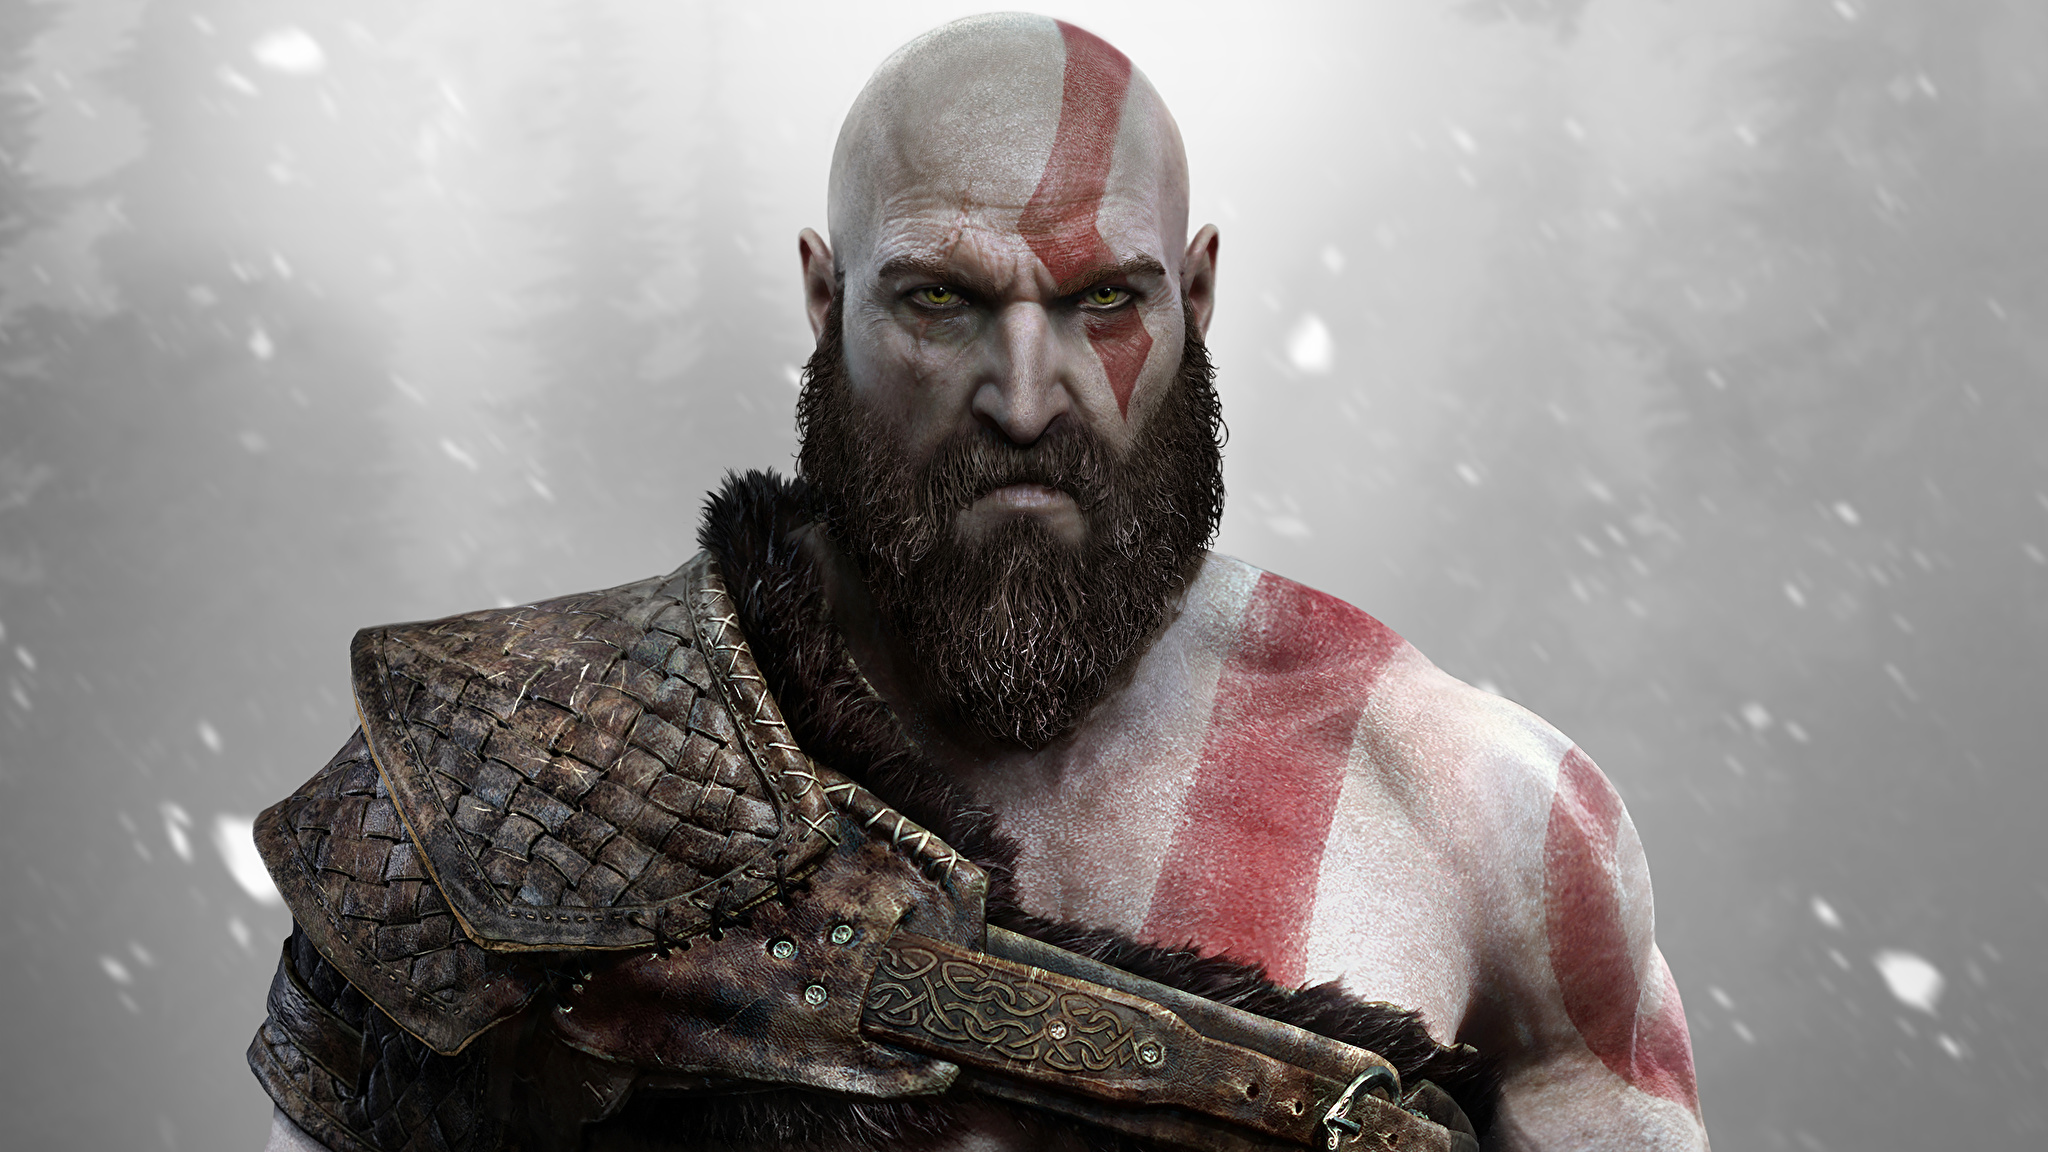 Wallpaper God Of War Man Ps4 Kratos Beard Fantasy Games